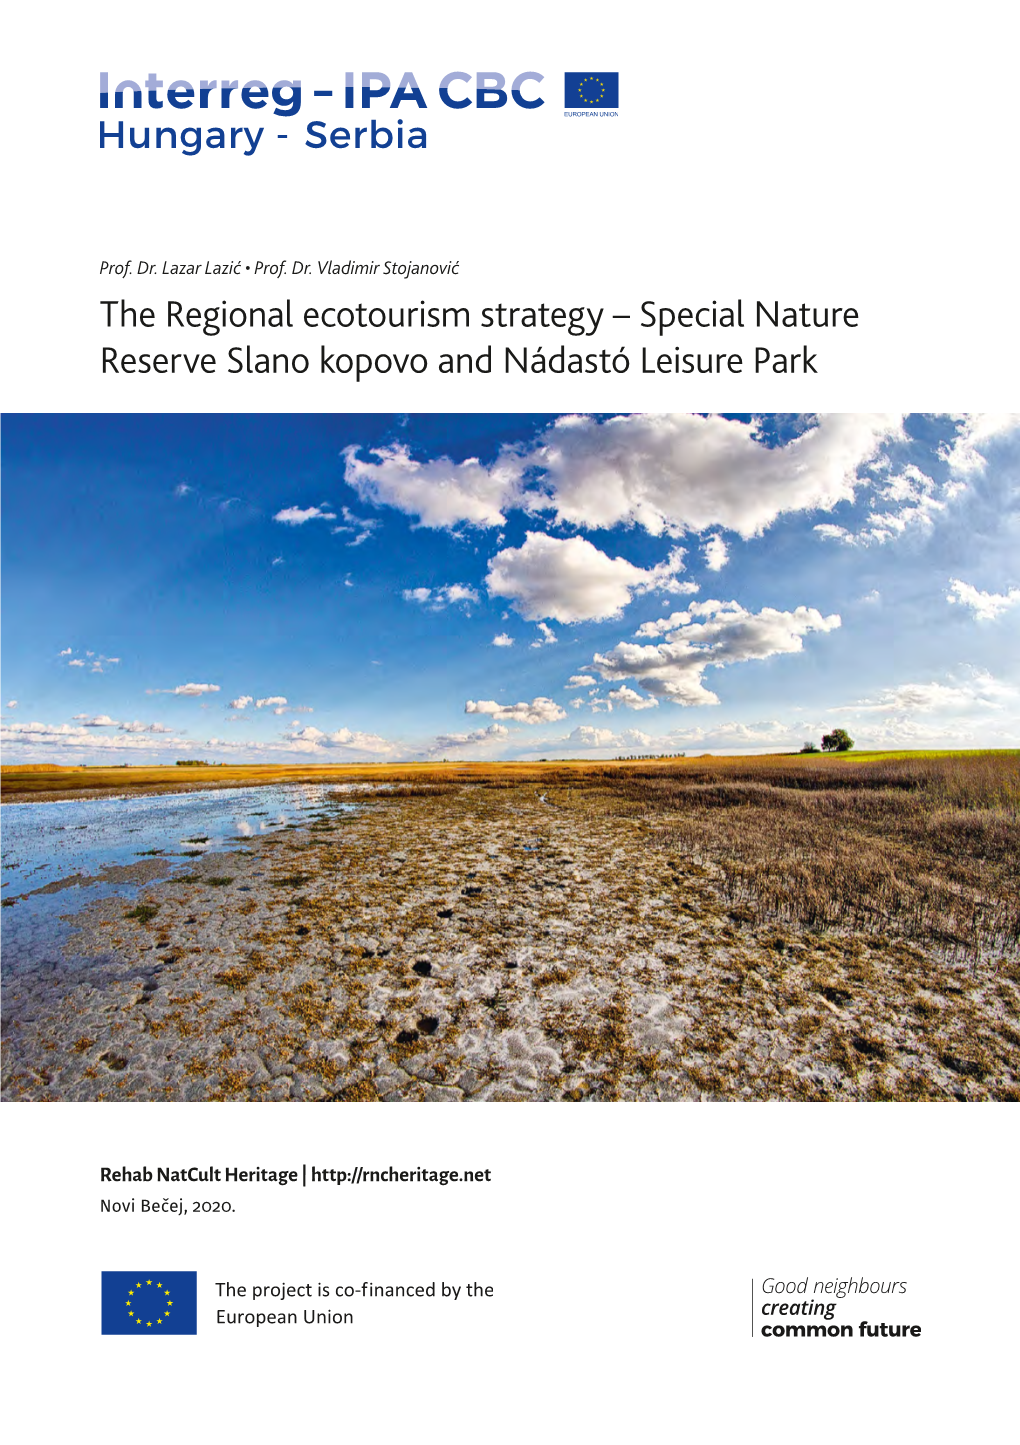 The Regional Ecotourism Strategy – Special Nature Reserve Slano Kopovo and Nádastó Leisure Park